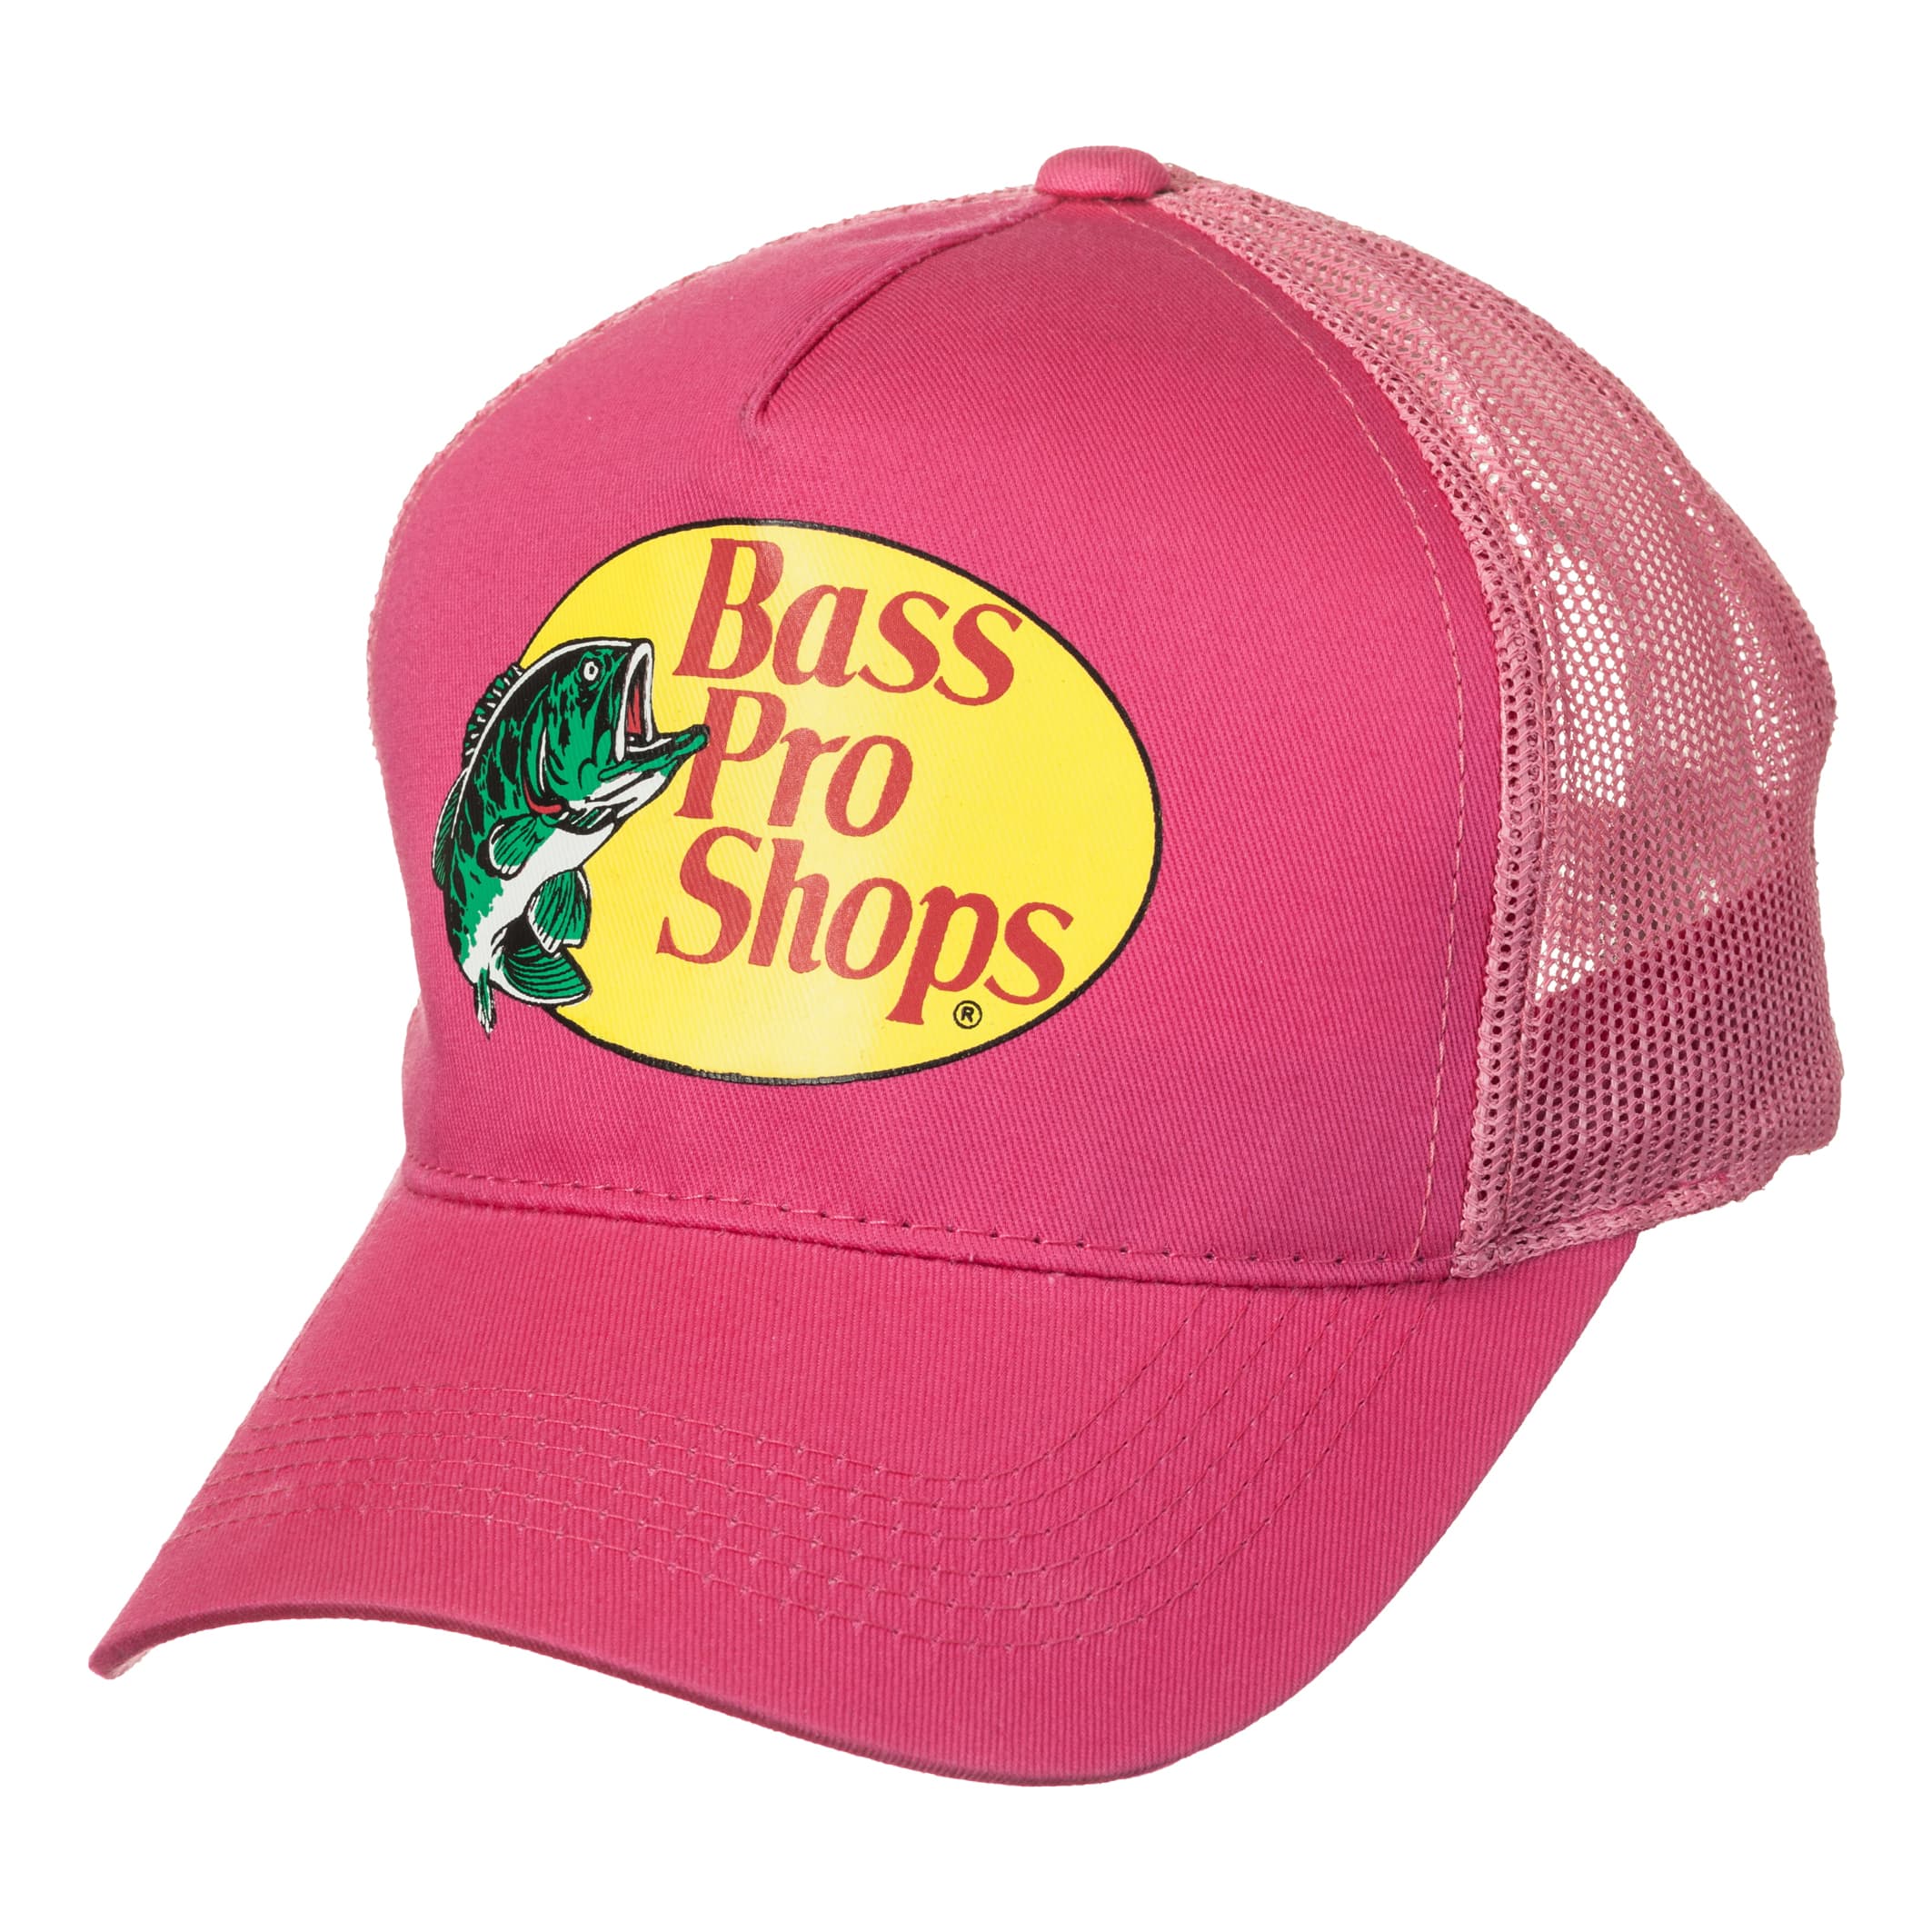 Bass Pro Shops® Trucker Cap - Fuchsia